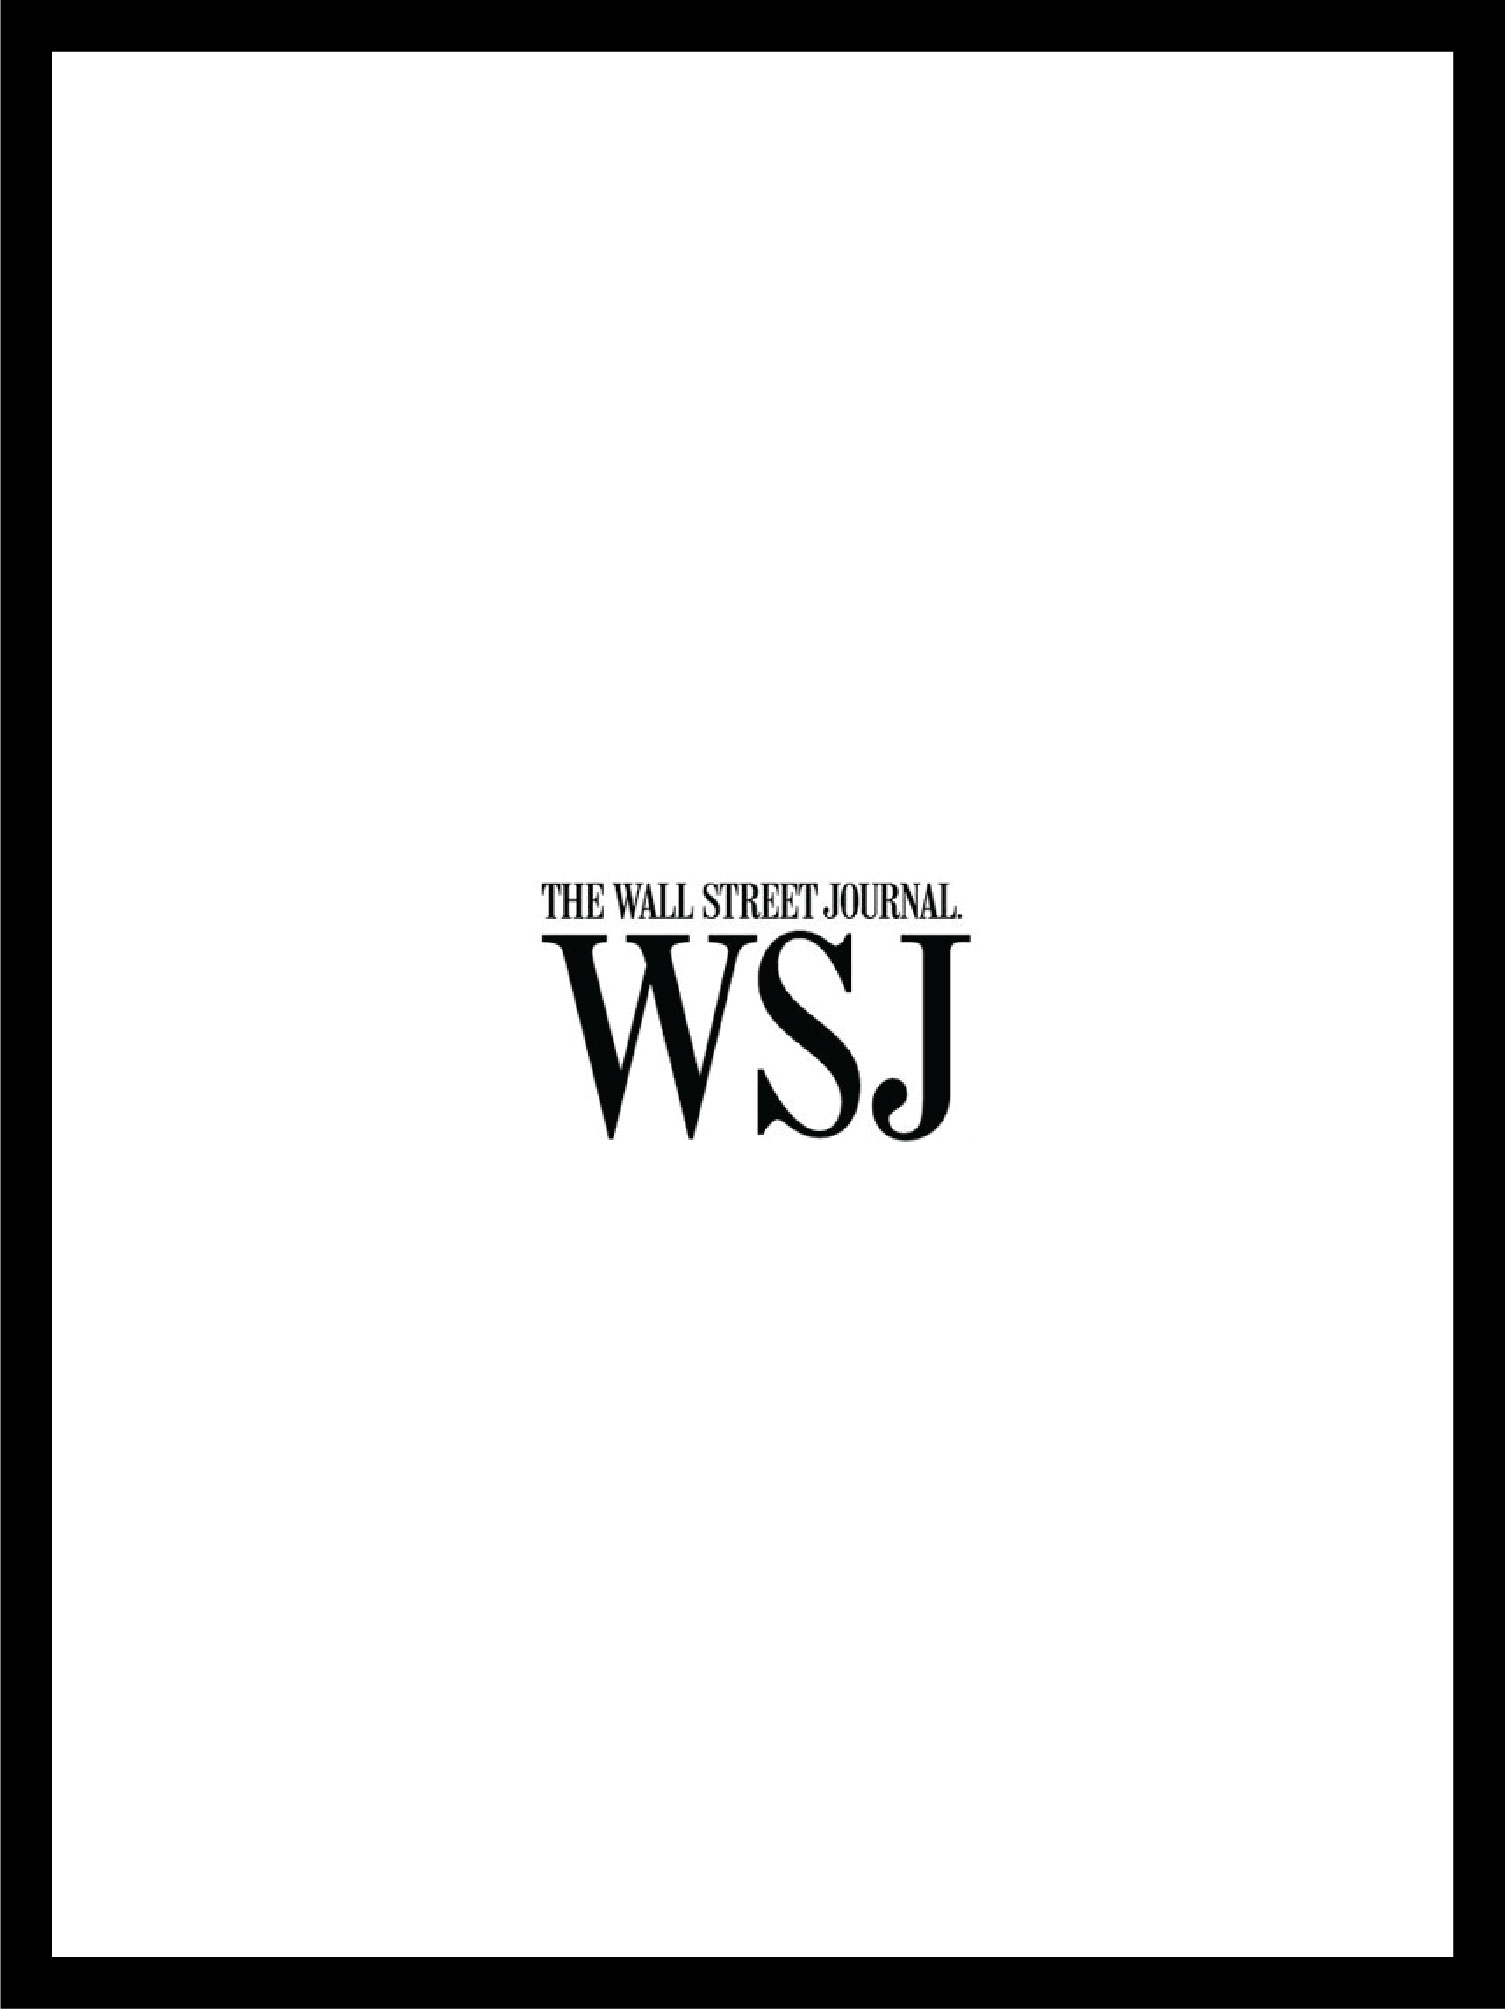 couverture et logo magazine wall street journal